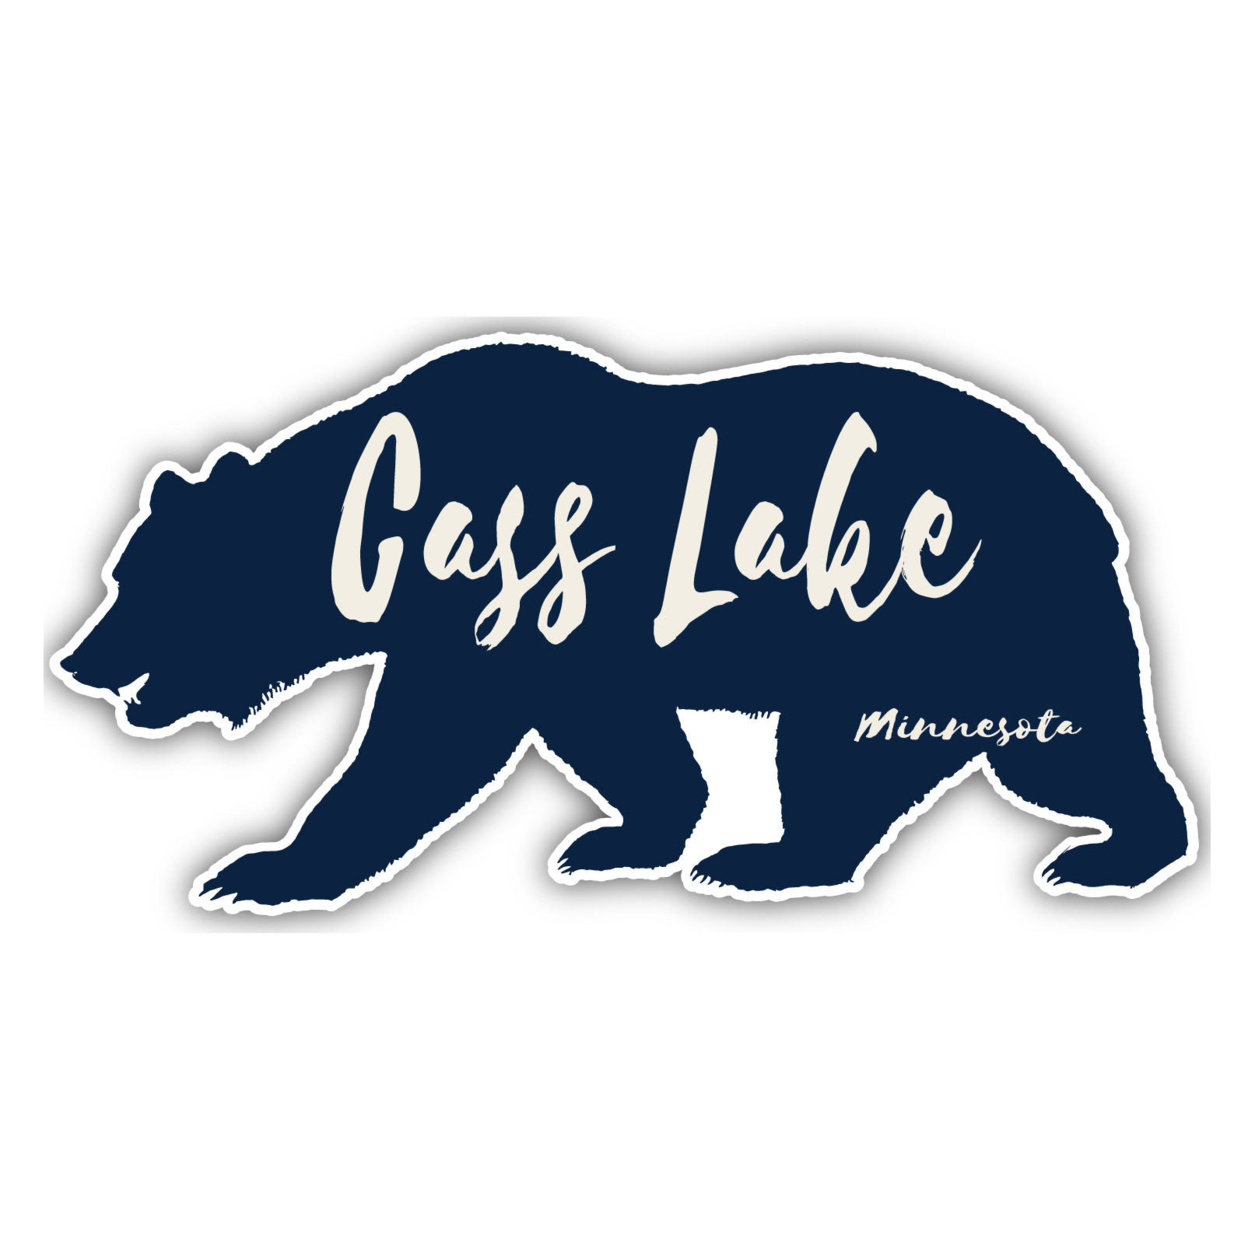 Cass Lake Minnesota Souvenir Decorative Stickers (Choose Theme And Size) - Single Unit, 2-Inch, Camp Life